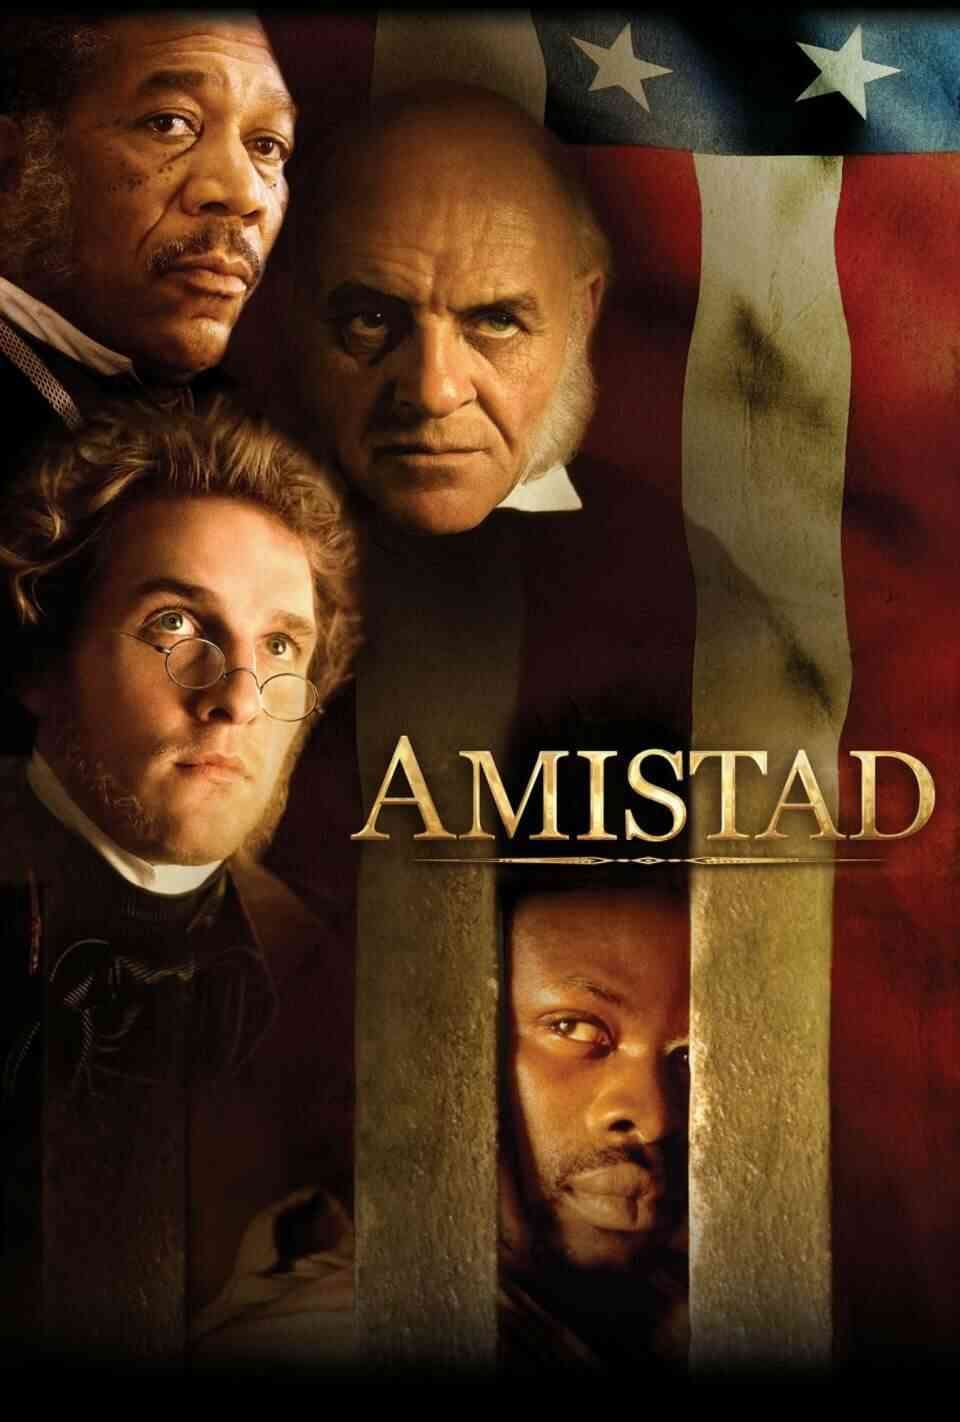 Read Amistad screenplay (poster)